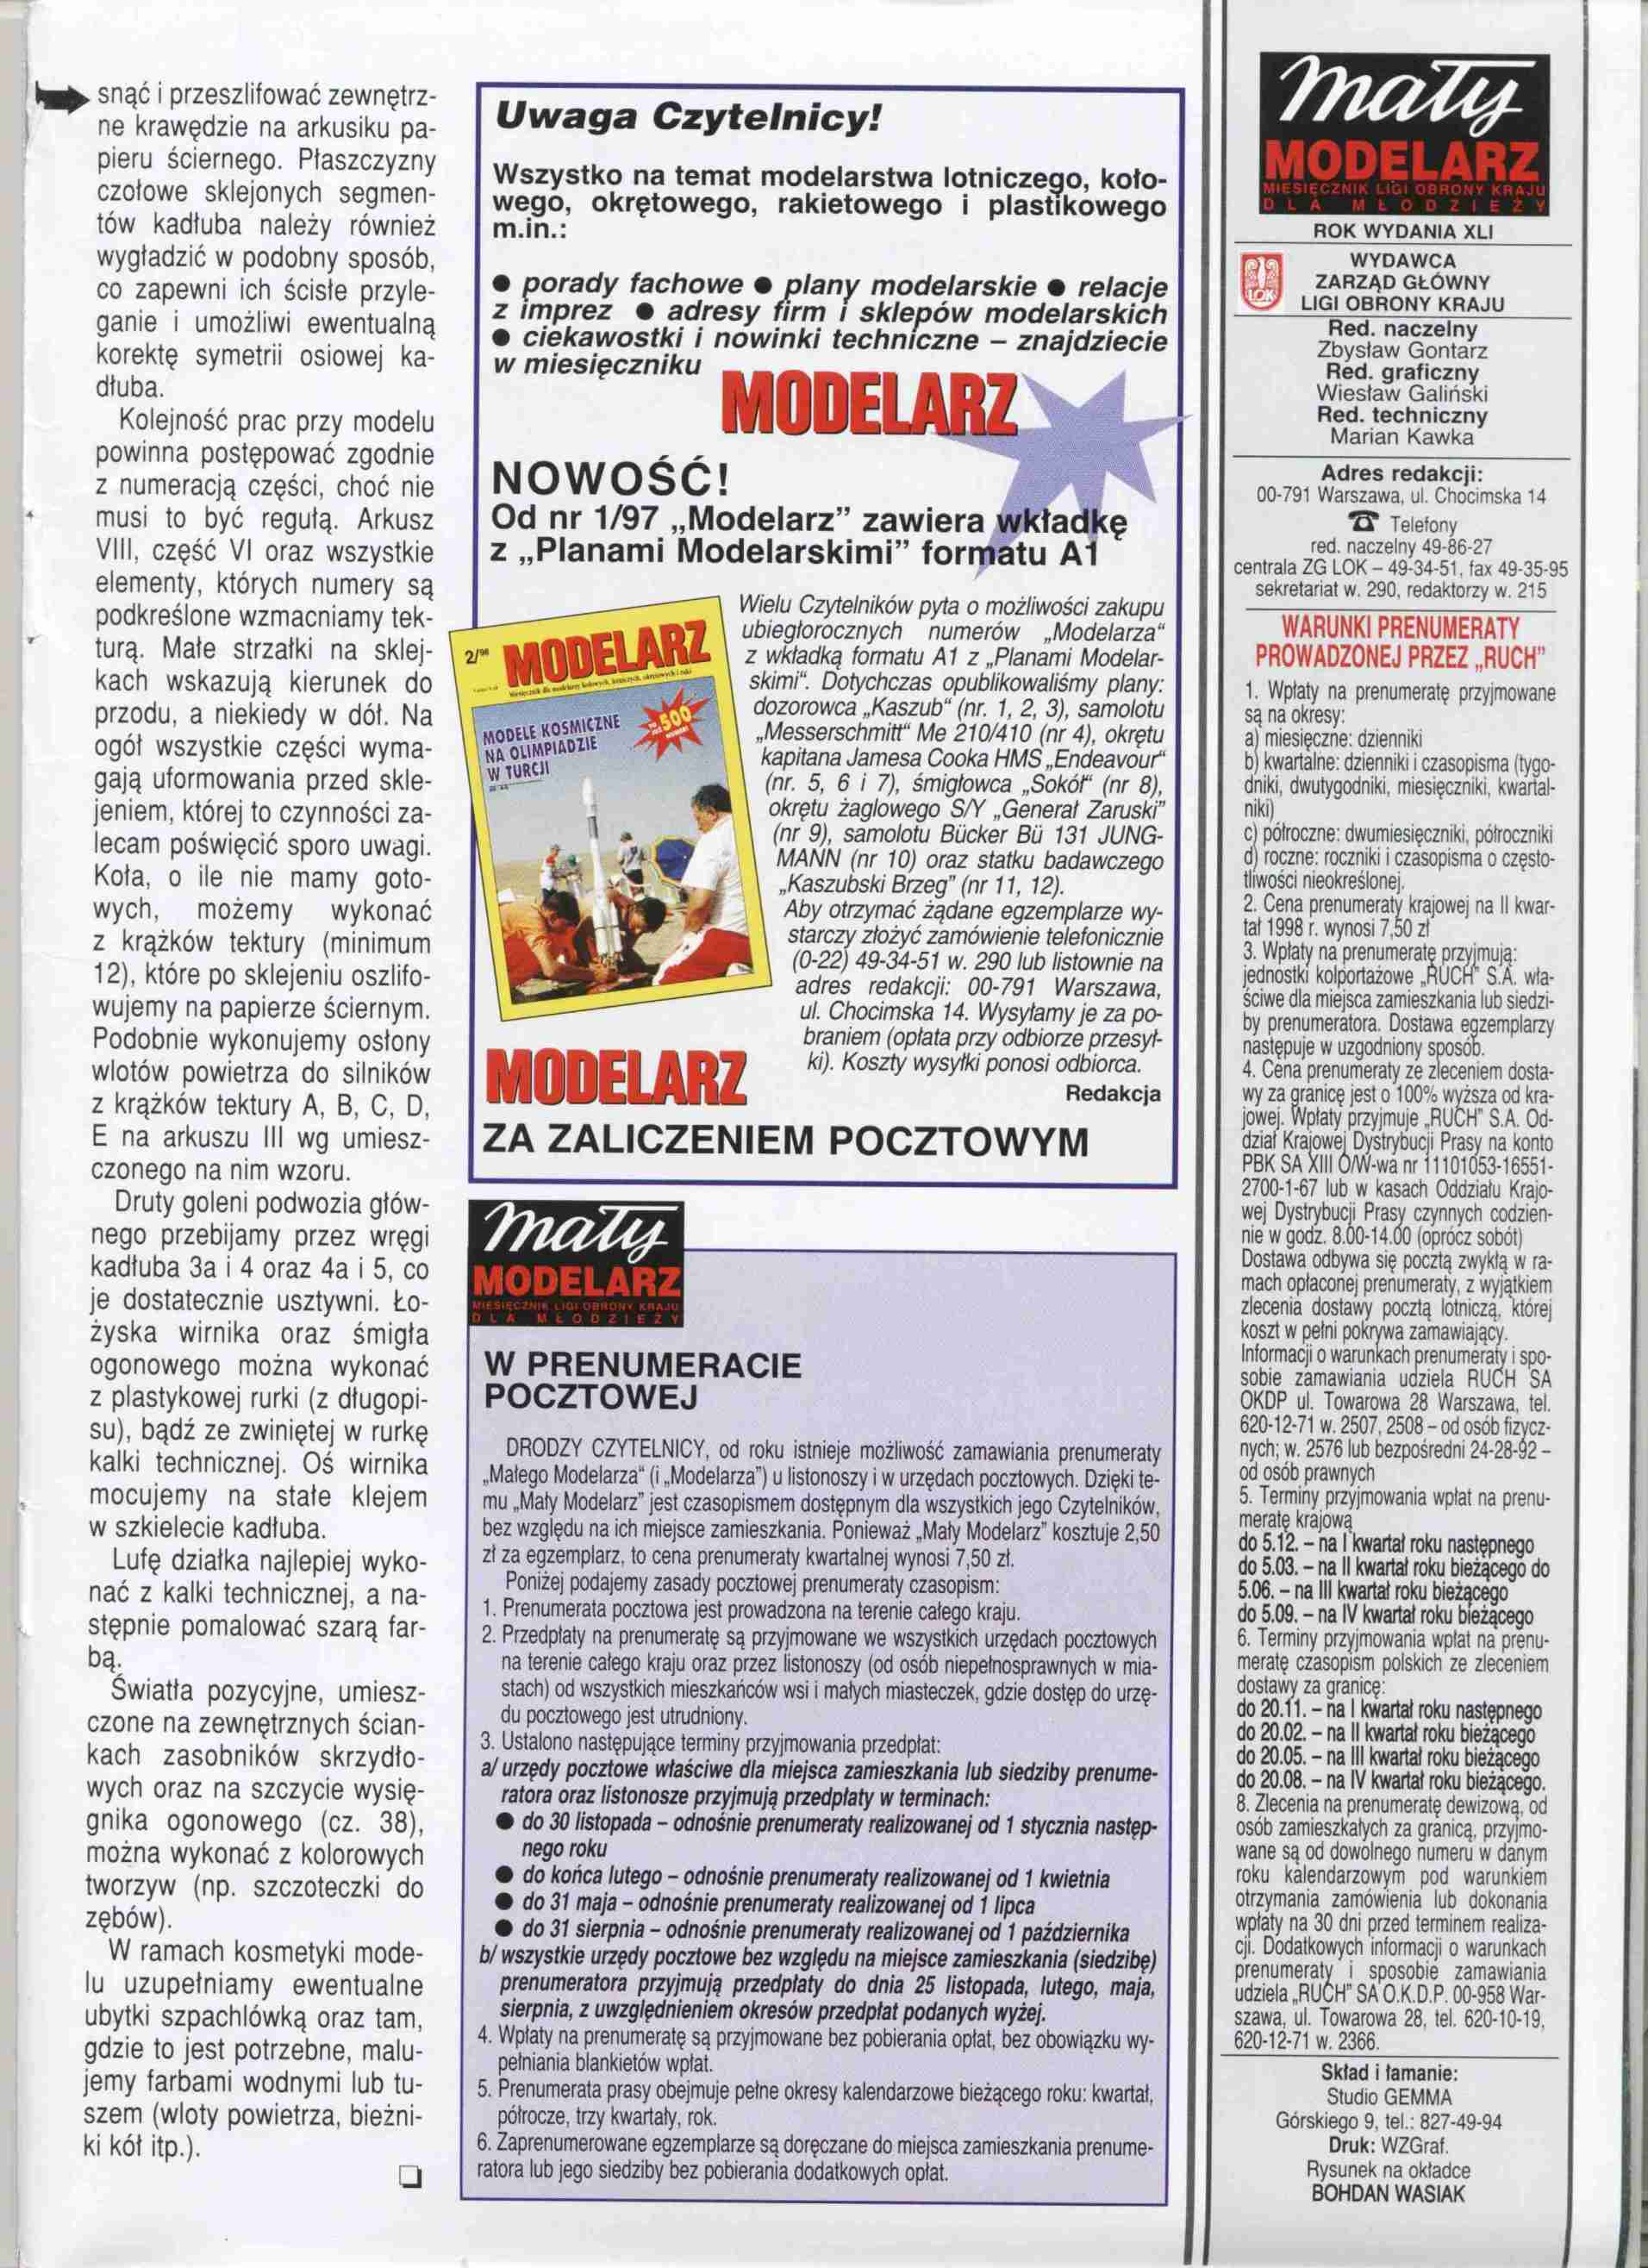 "Maly Modelarz" 5, 1998, 7 c.